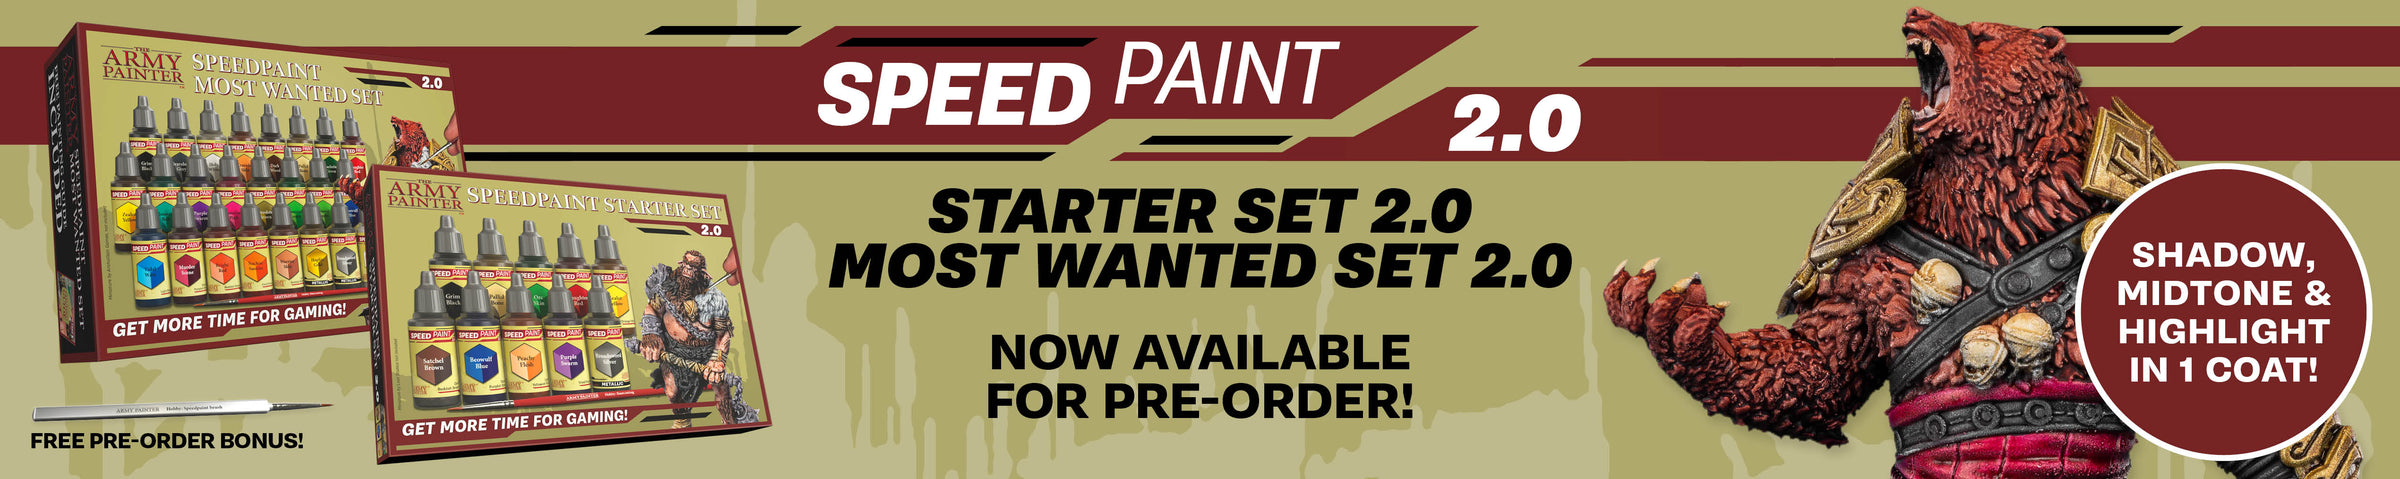 Speedpaint 2.0 - The Army Painter